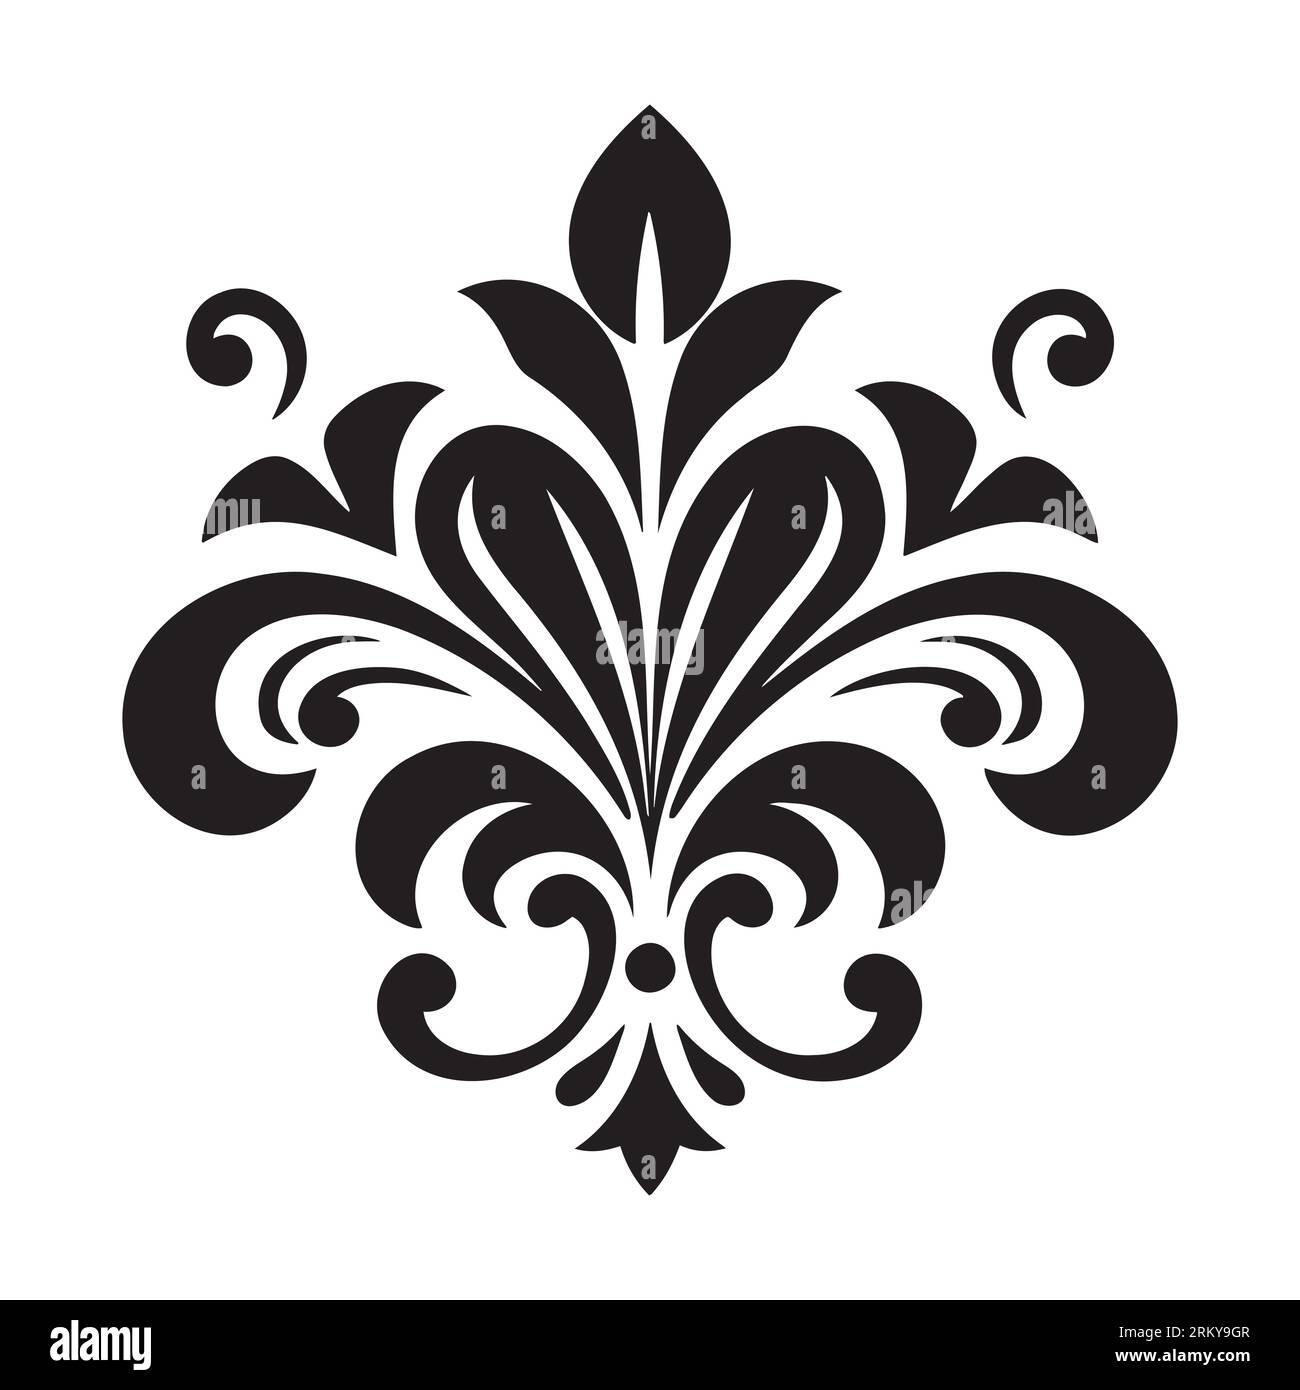 Ornament, Gravur, Rand, florales Retro-Muster, antiker Stil, acanthus, Laub, Wirbel, dekoratives Designelement Stock Vektor